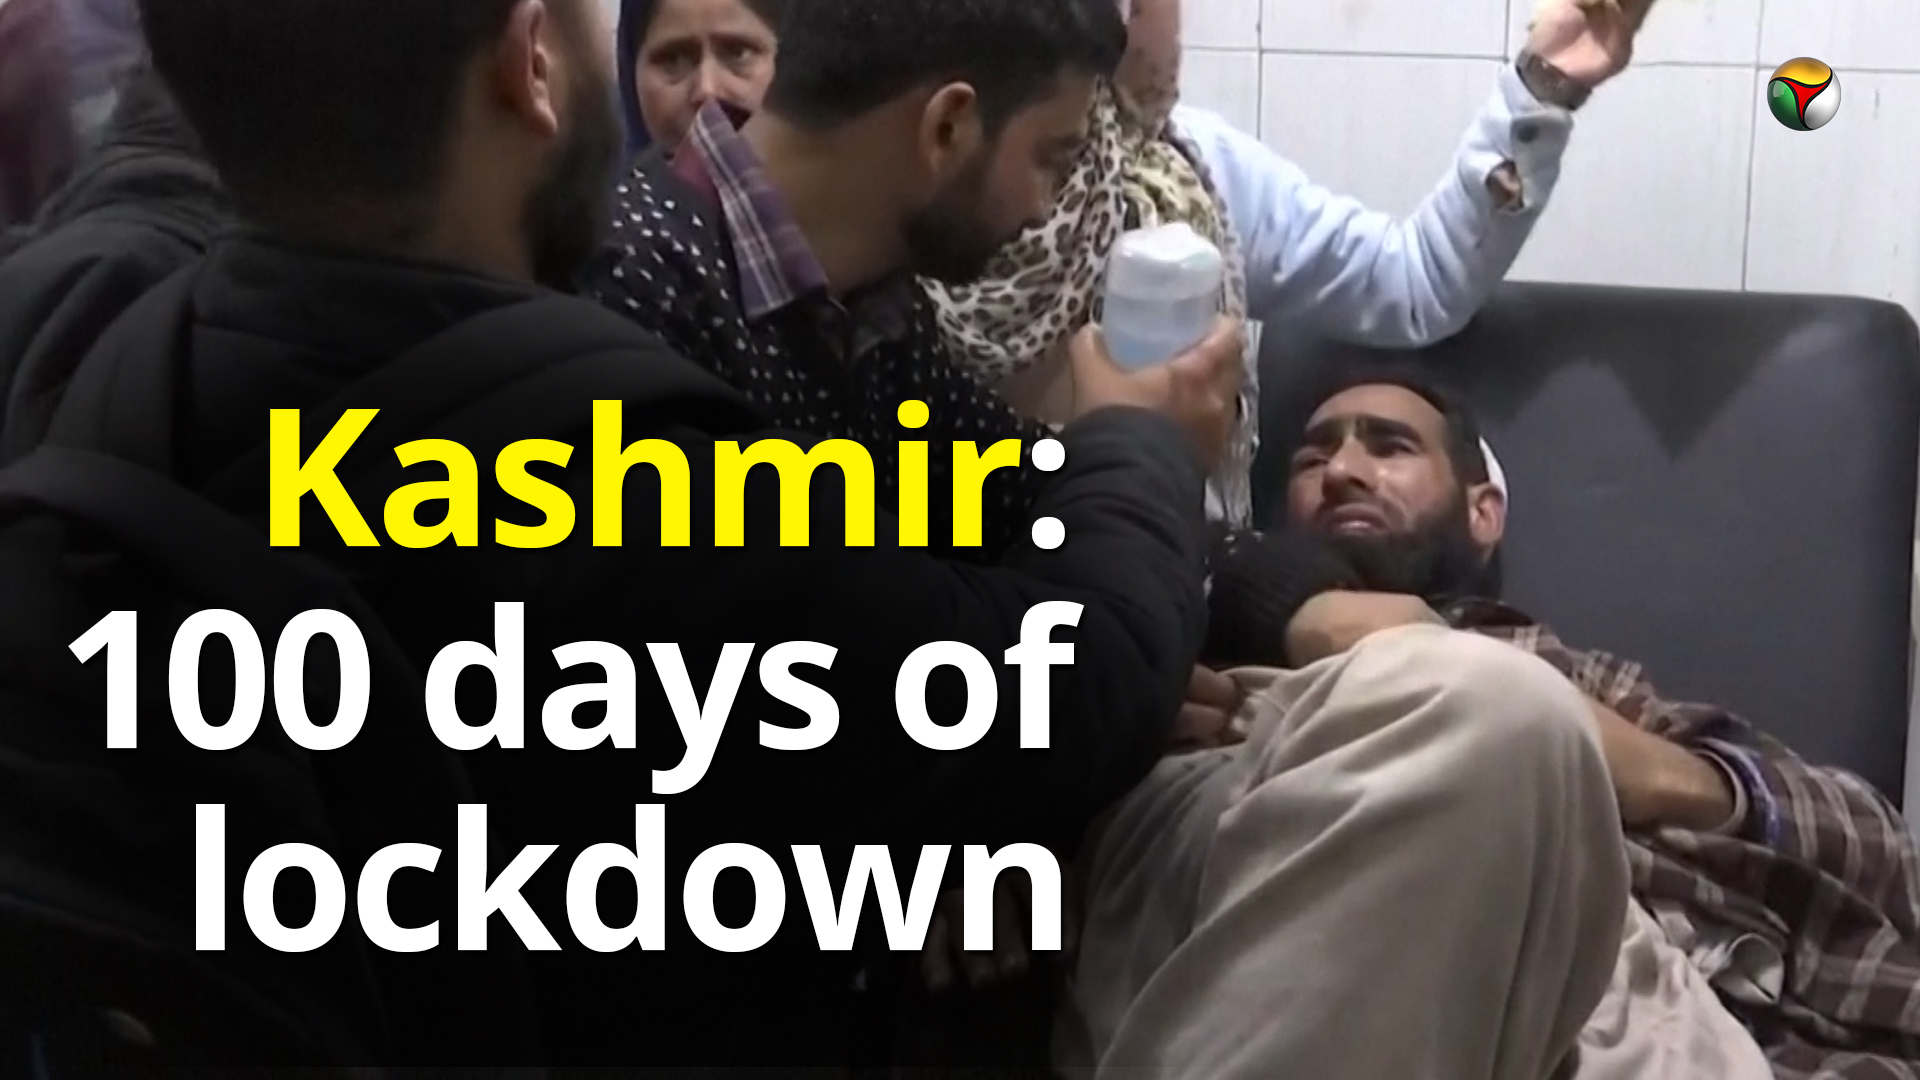 Kashmir: 100 days of lockdown